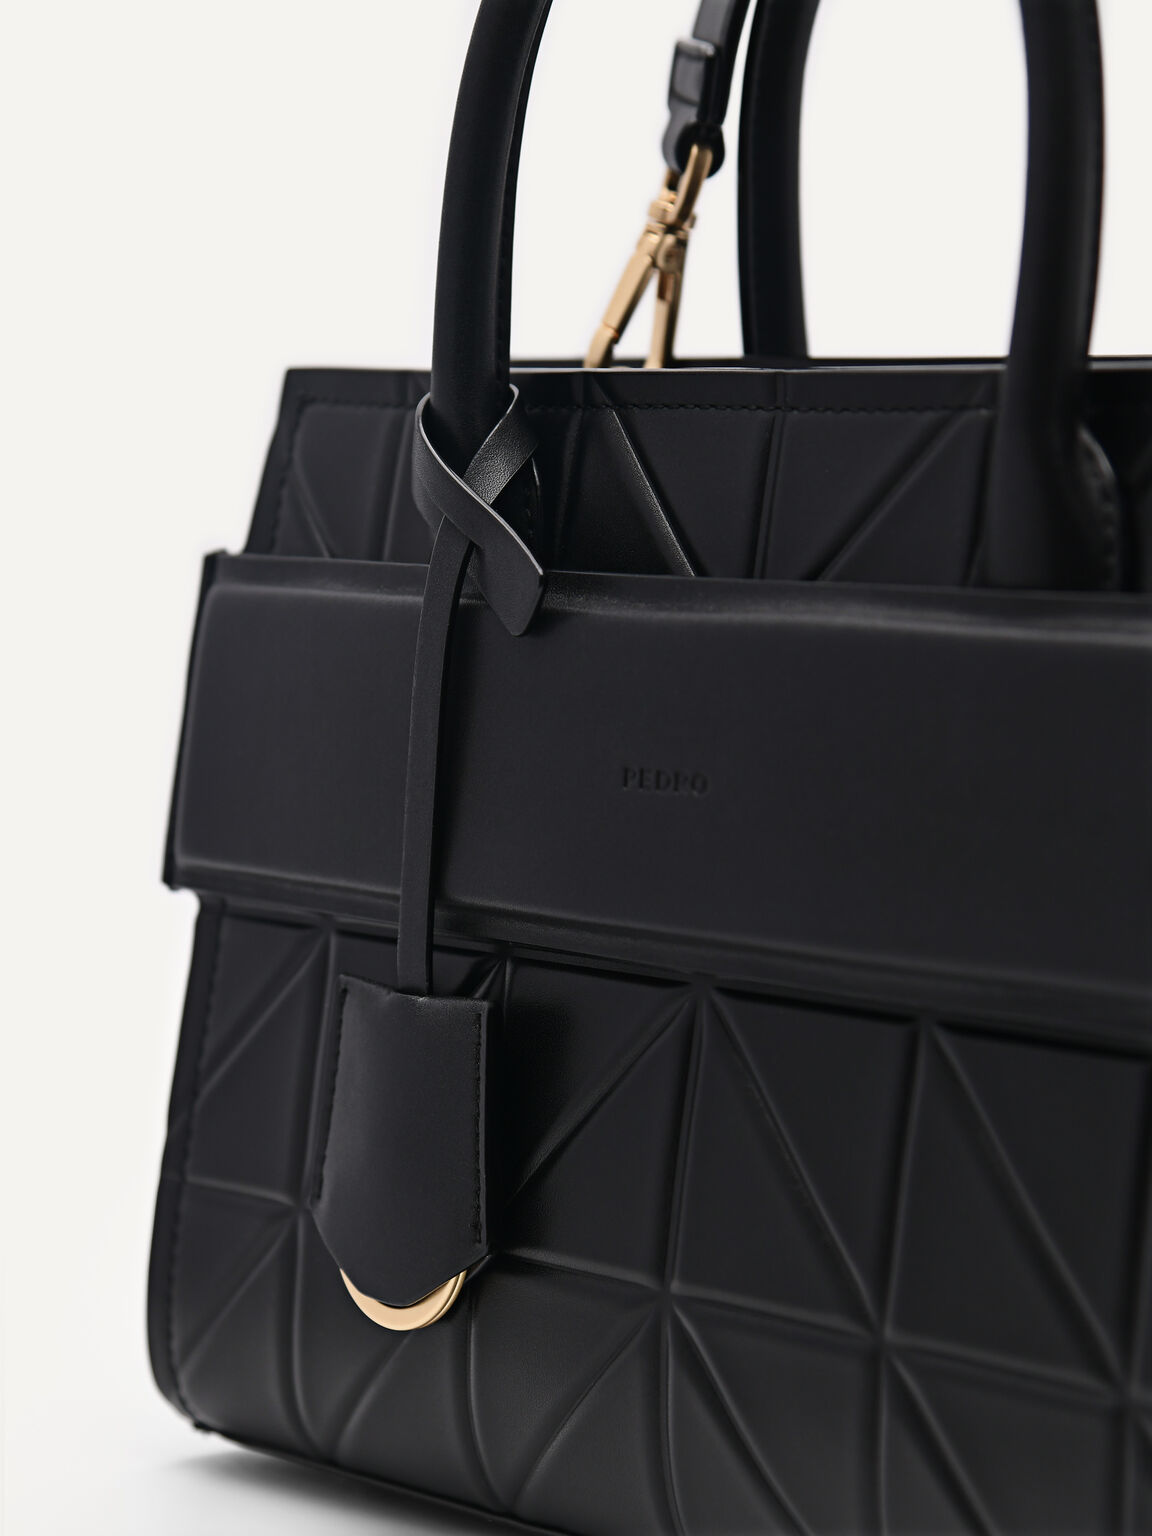 PEDRO Studio Bella Leather Handbag in Pixel, Black, hi-res